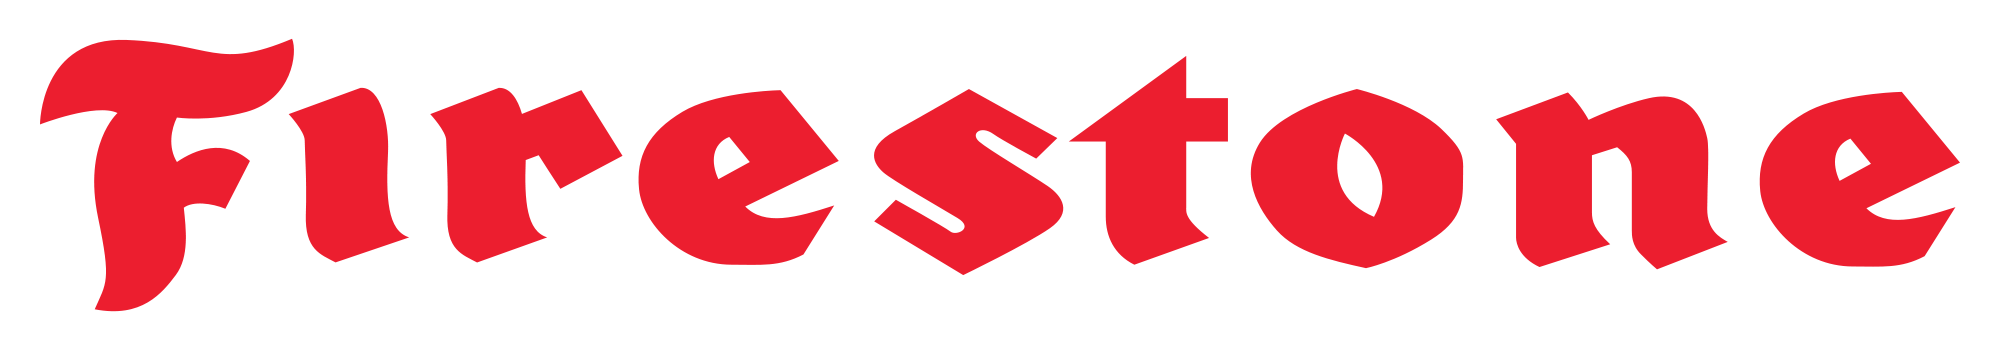 firestone-logo.png